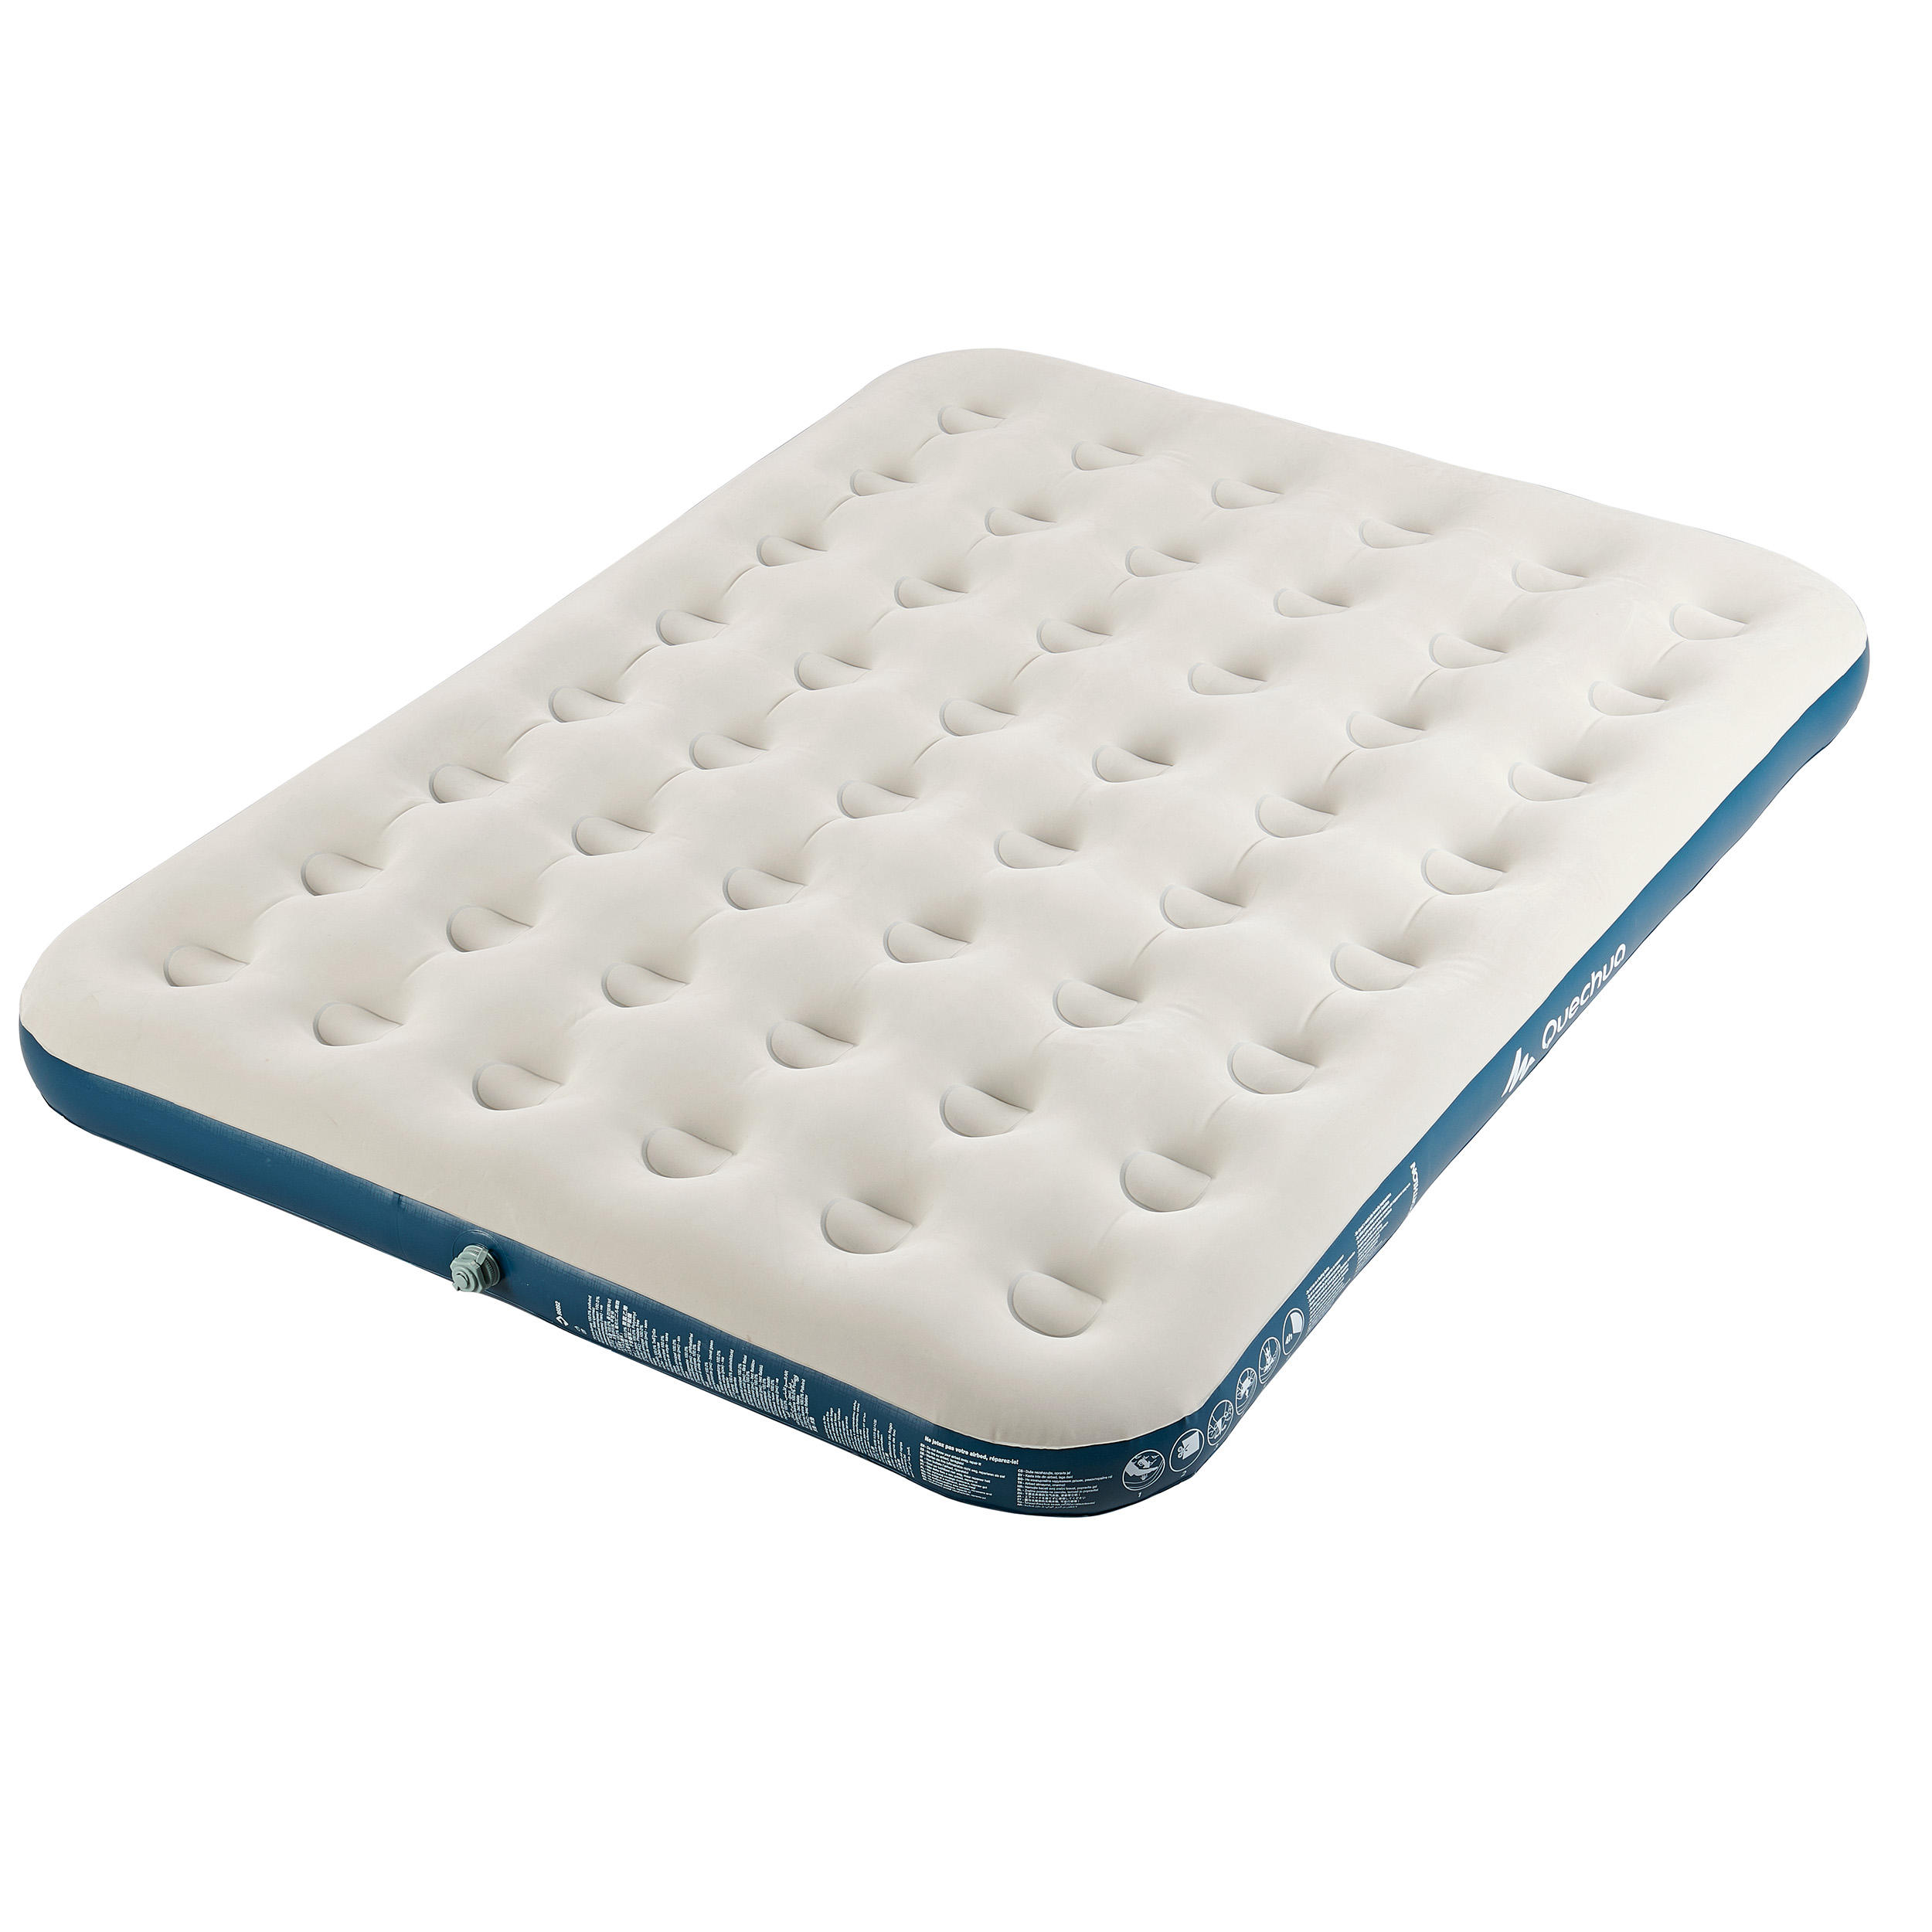 double camping mattress pad